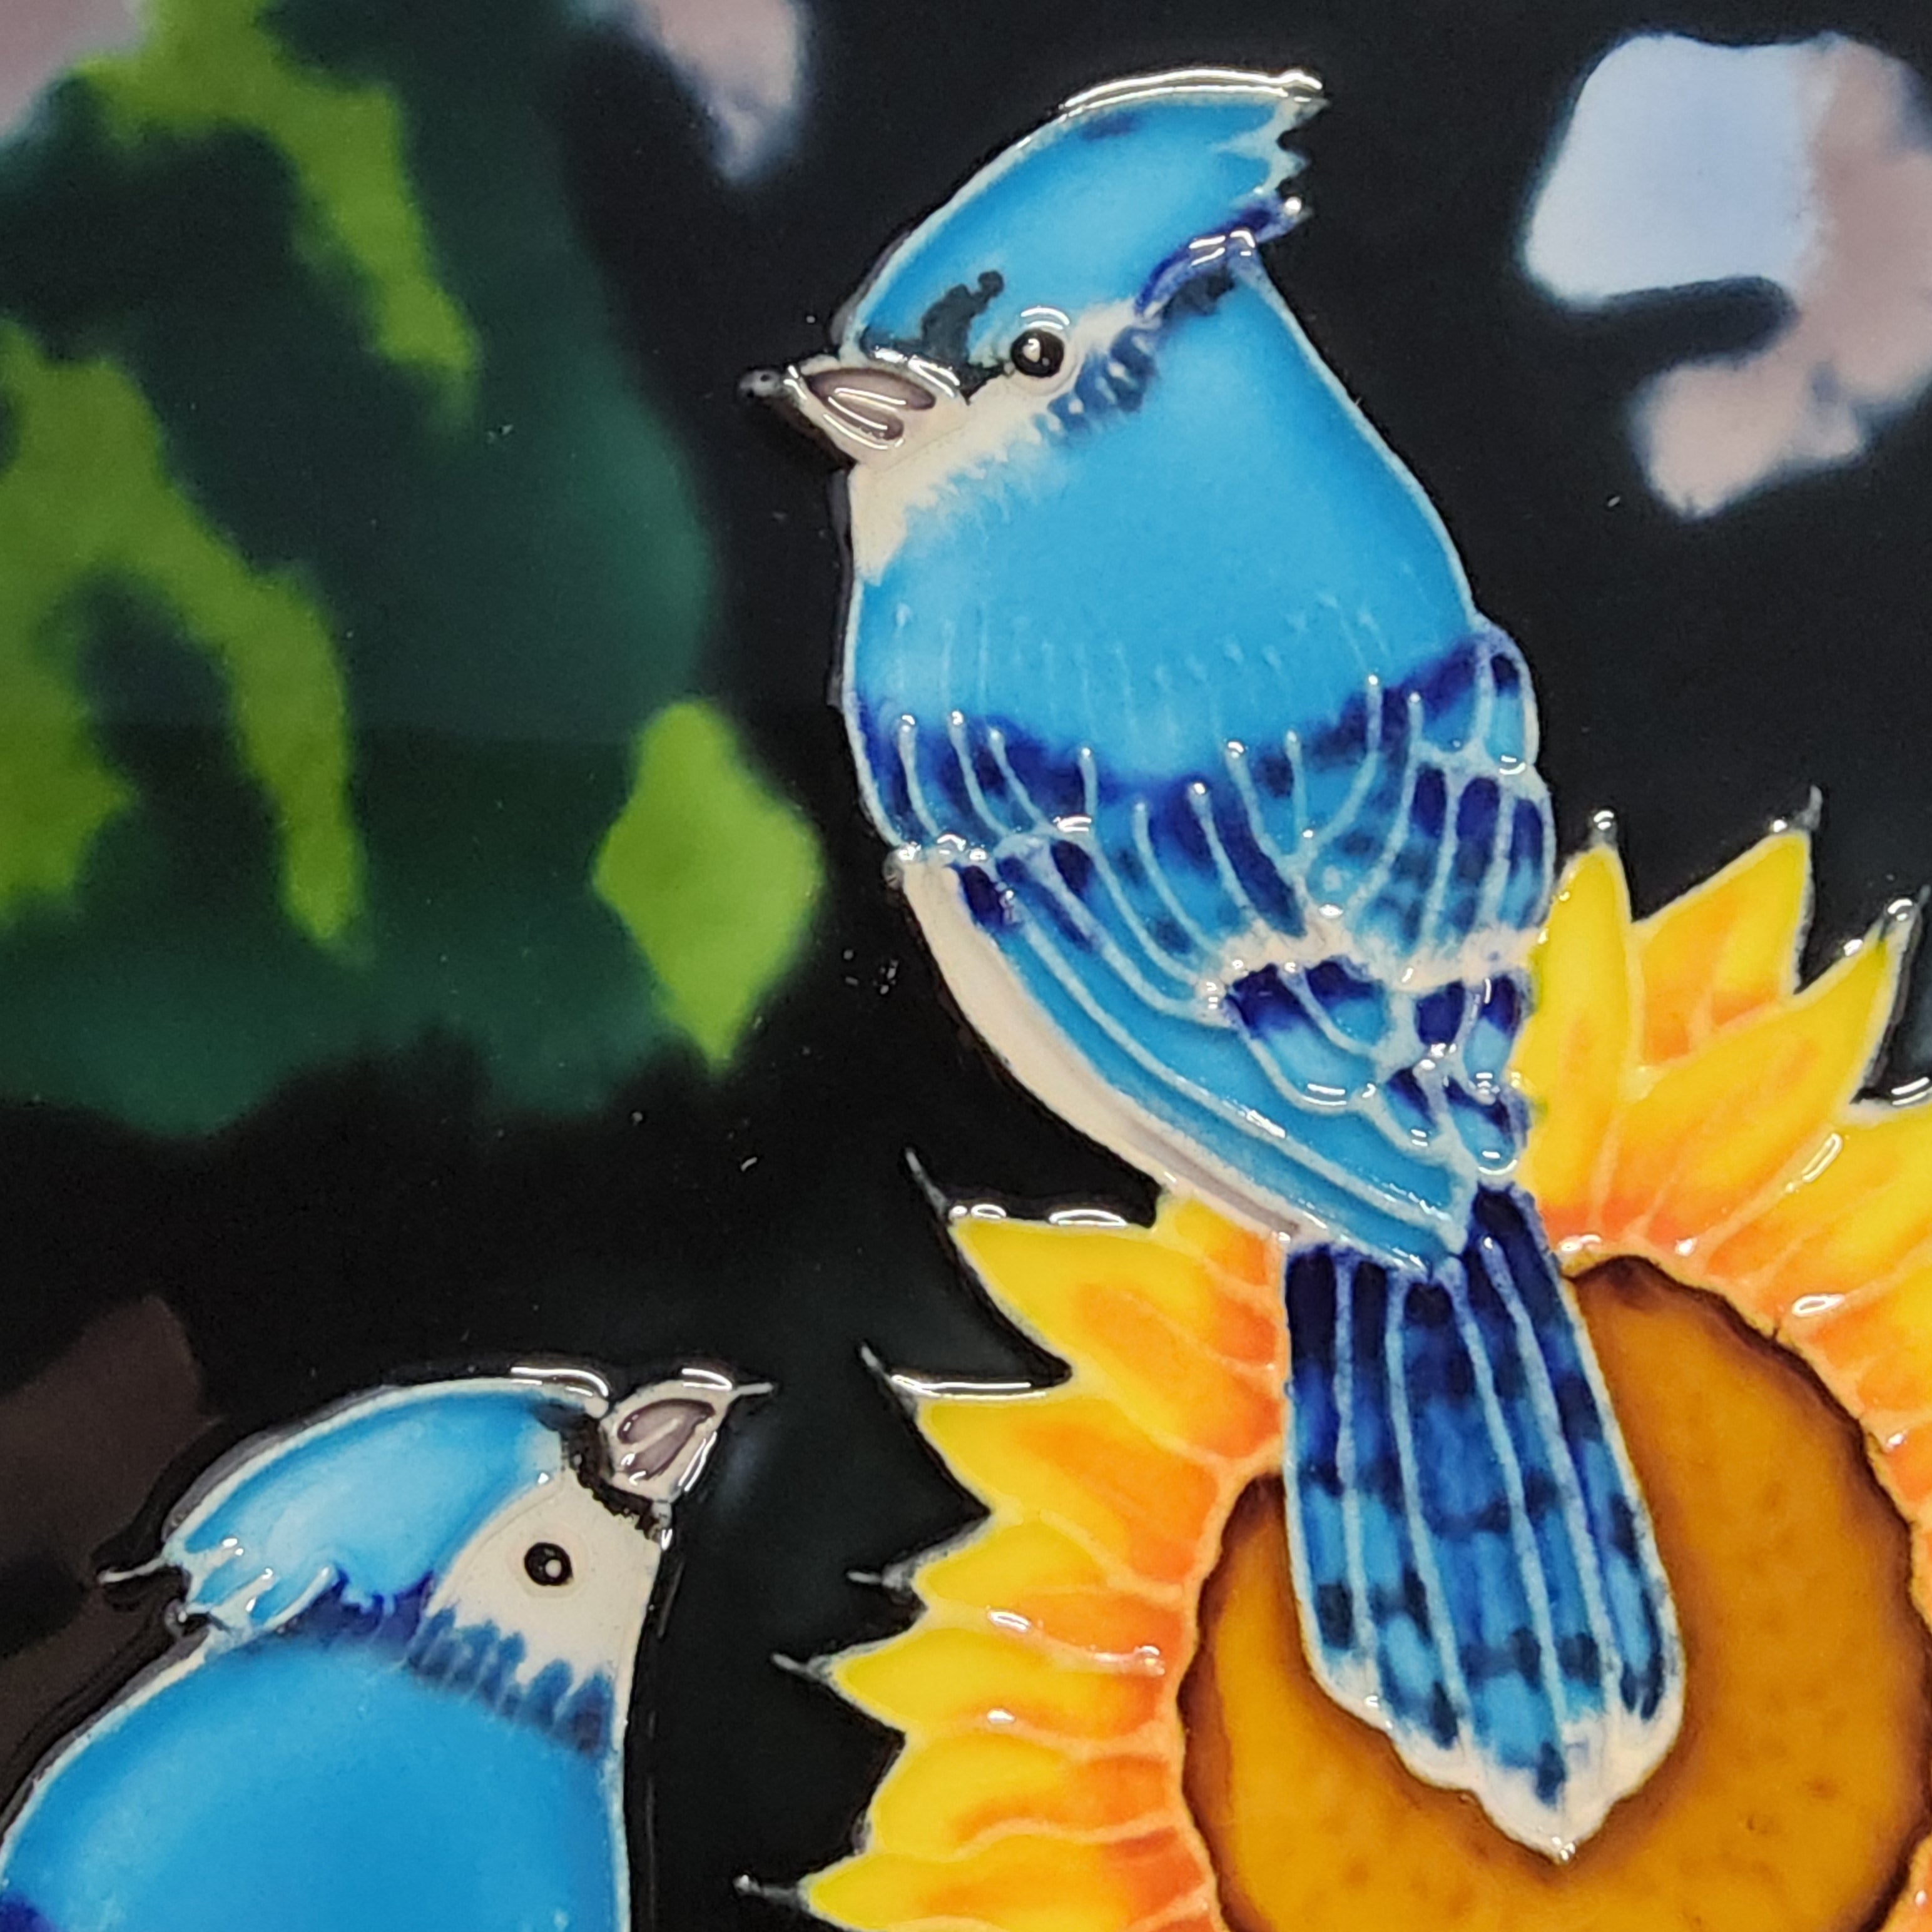 Ceramic Tile Art Plaque - 8x12" - Blue Jays on Sunflowers 231245